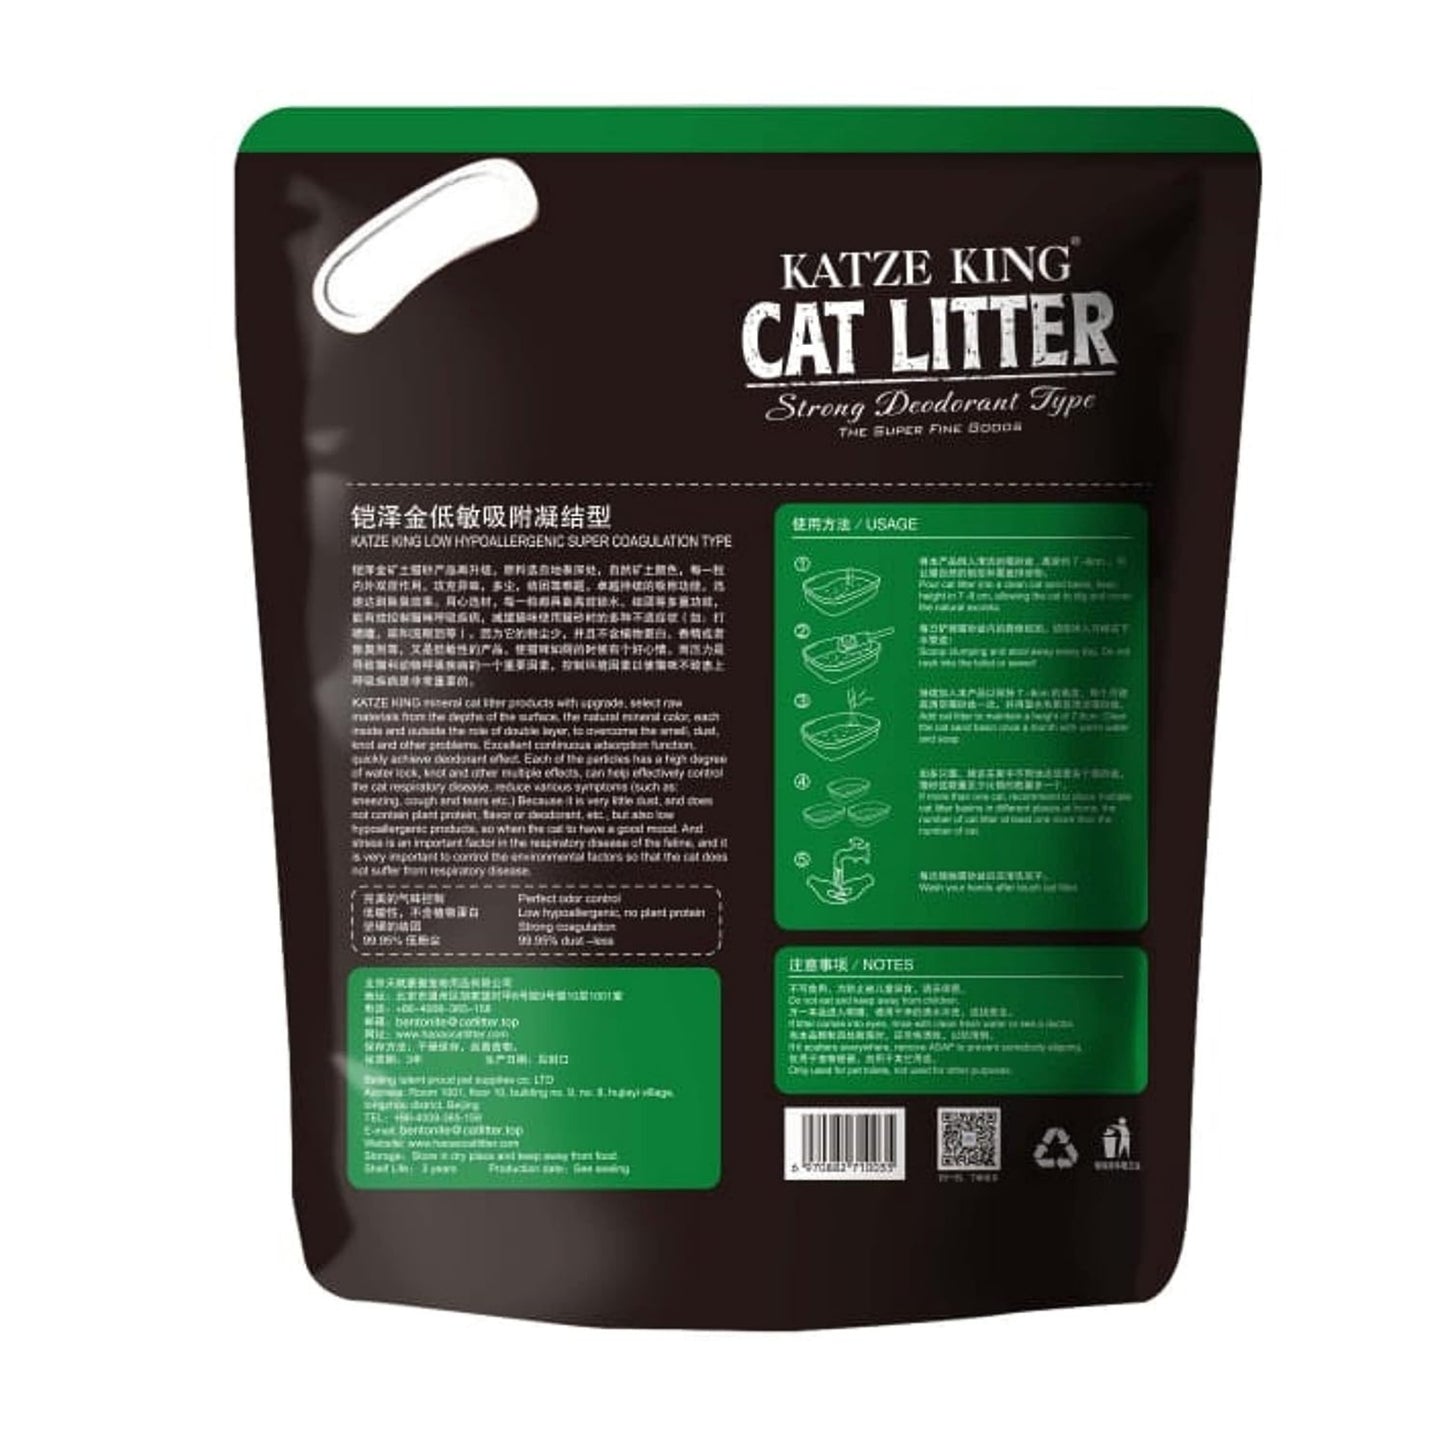 Katze King Strong Apple Fragrance Cat Litter Sand, 7Kg/10L - Pack of 2